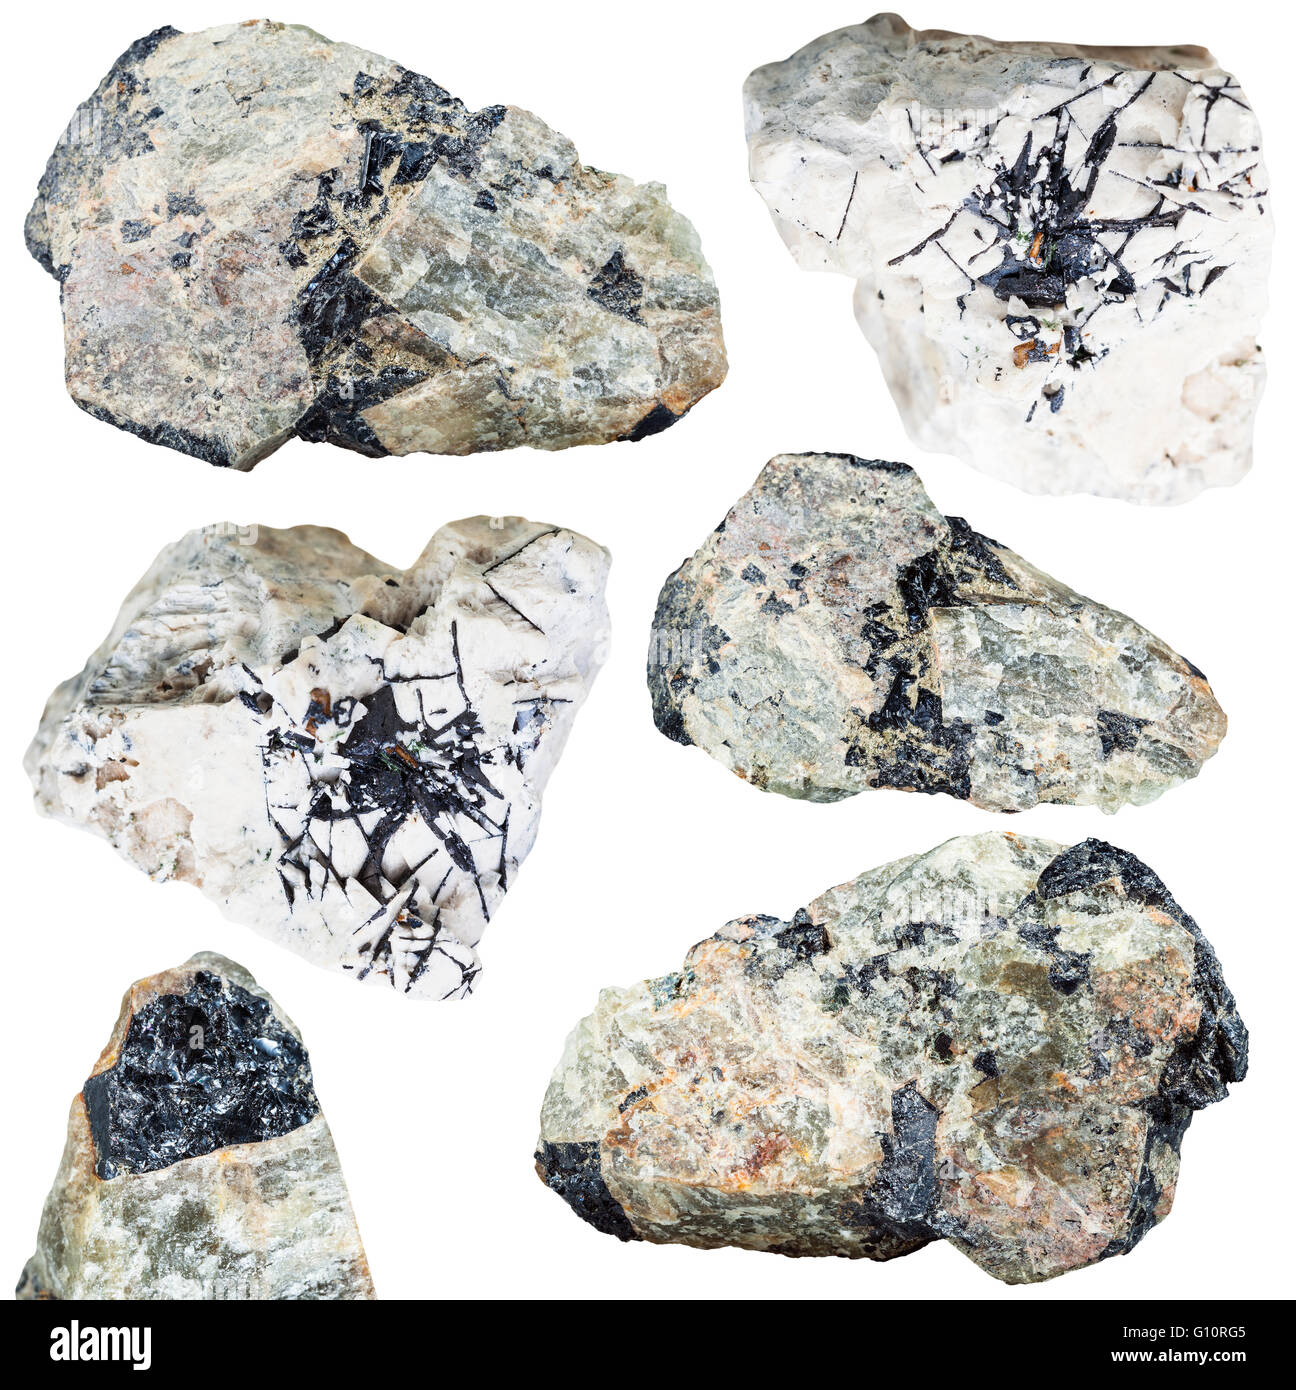 set of ilmenite ore on natural mineral stones and rocks (nepheline, dolomite)  isolated on white background Stock Photo - Alamy